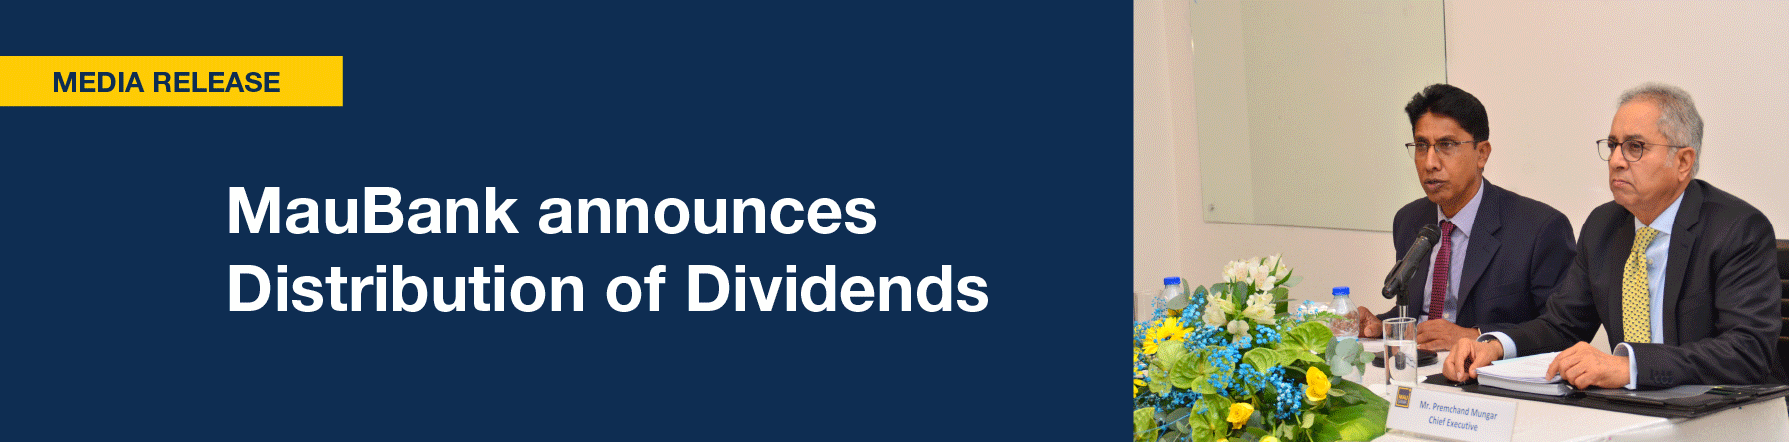 MEDIA RELEASE - MauBank announces Distribution of Dividends